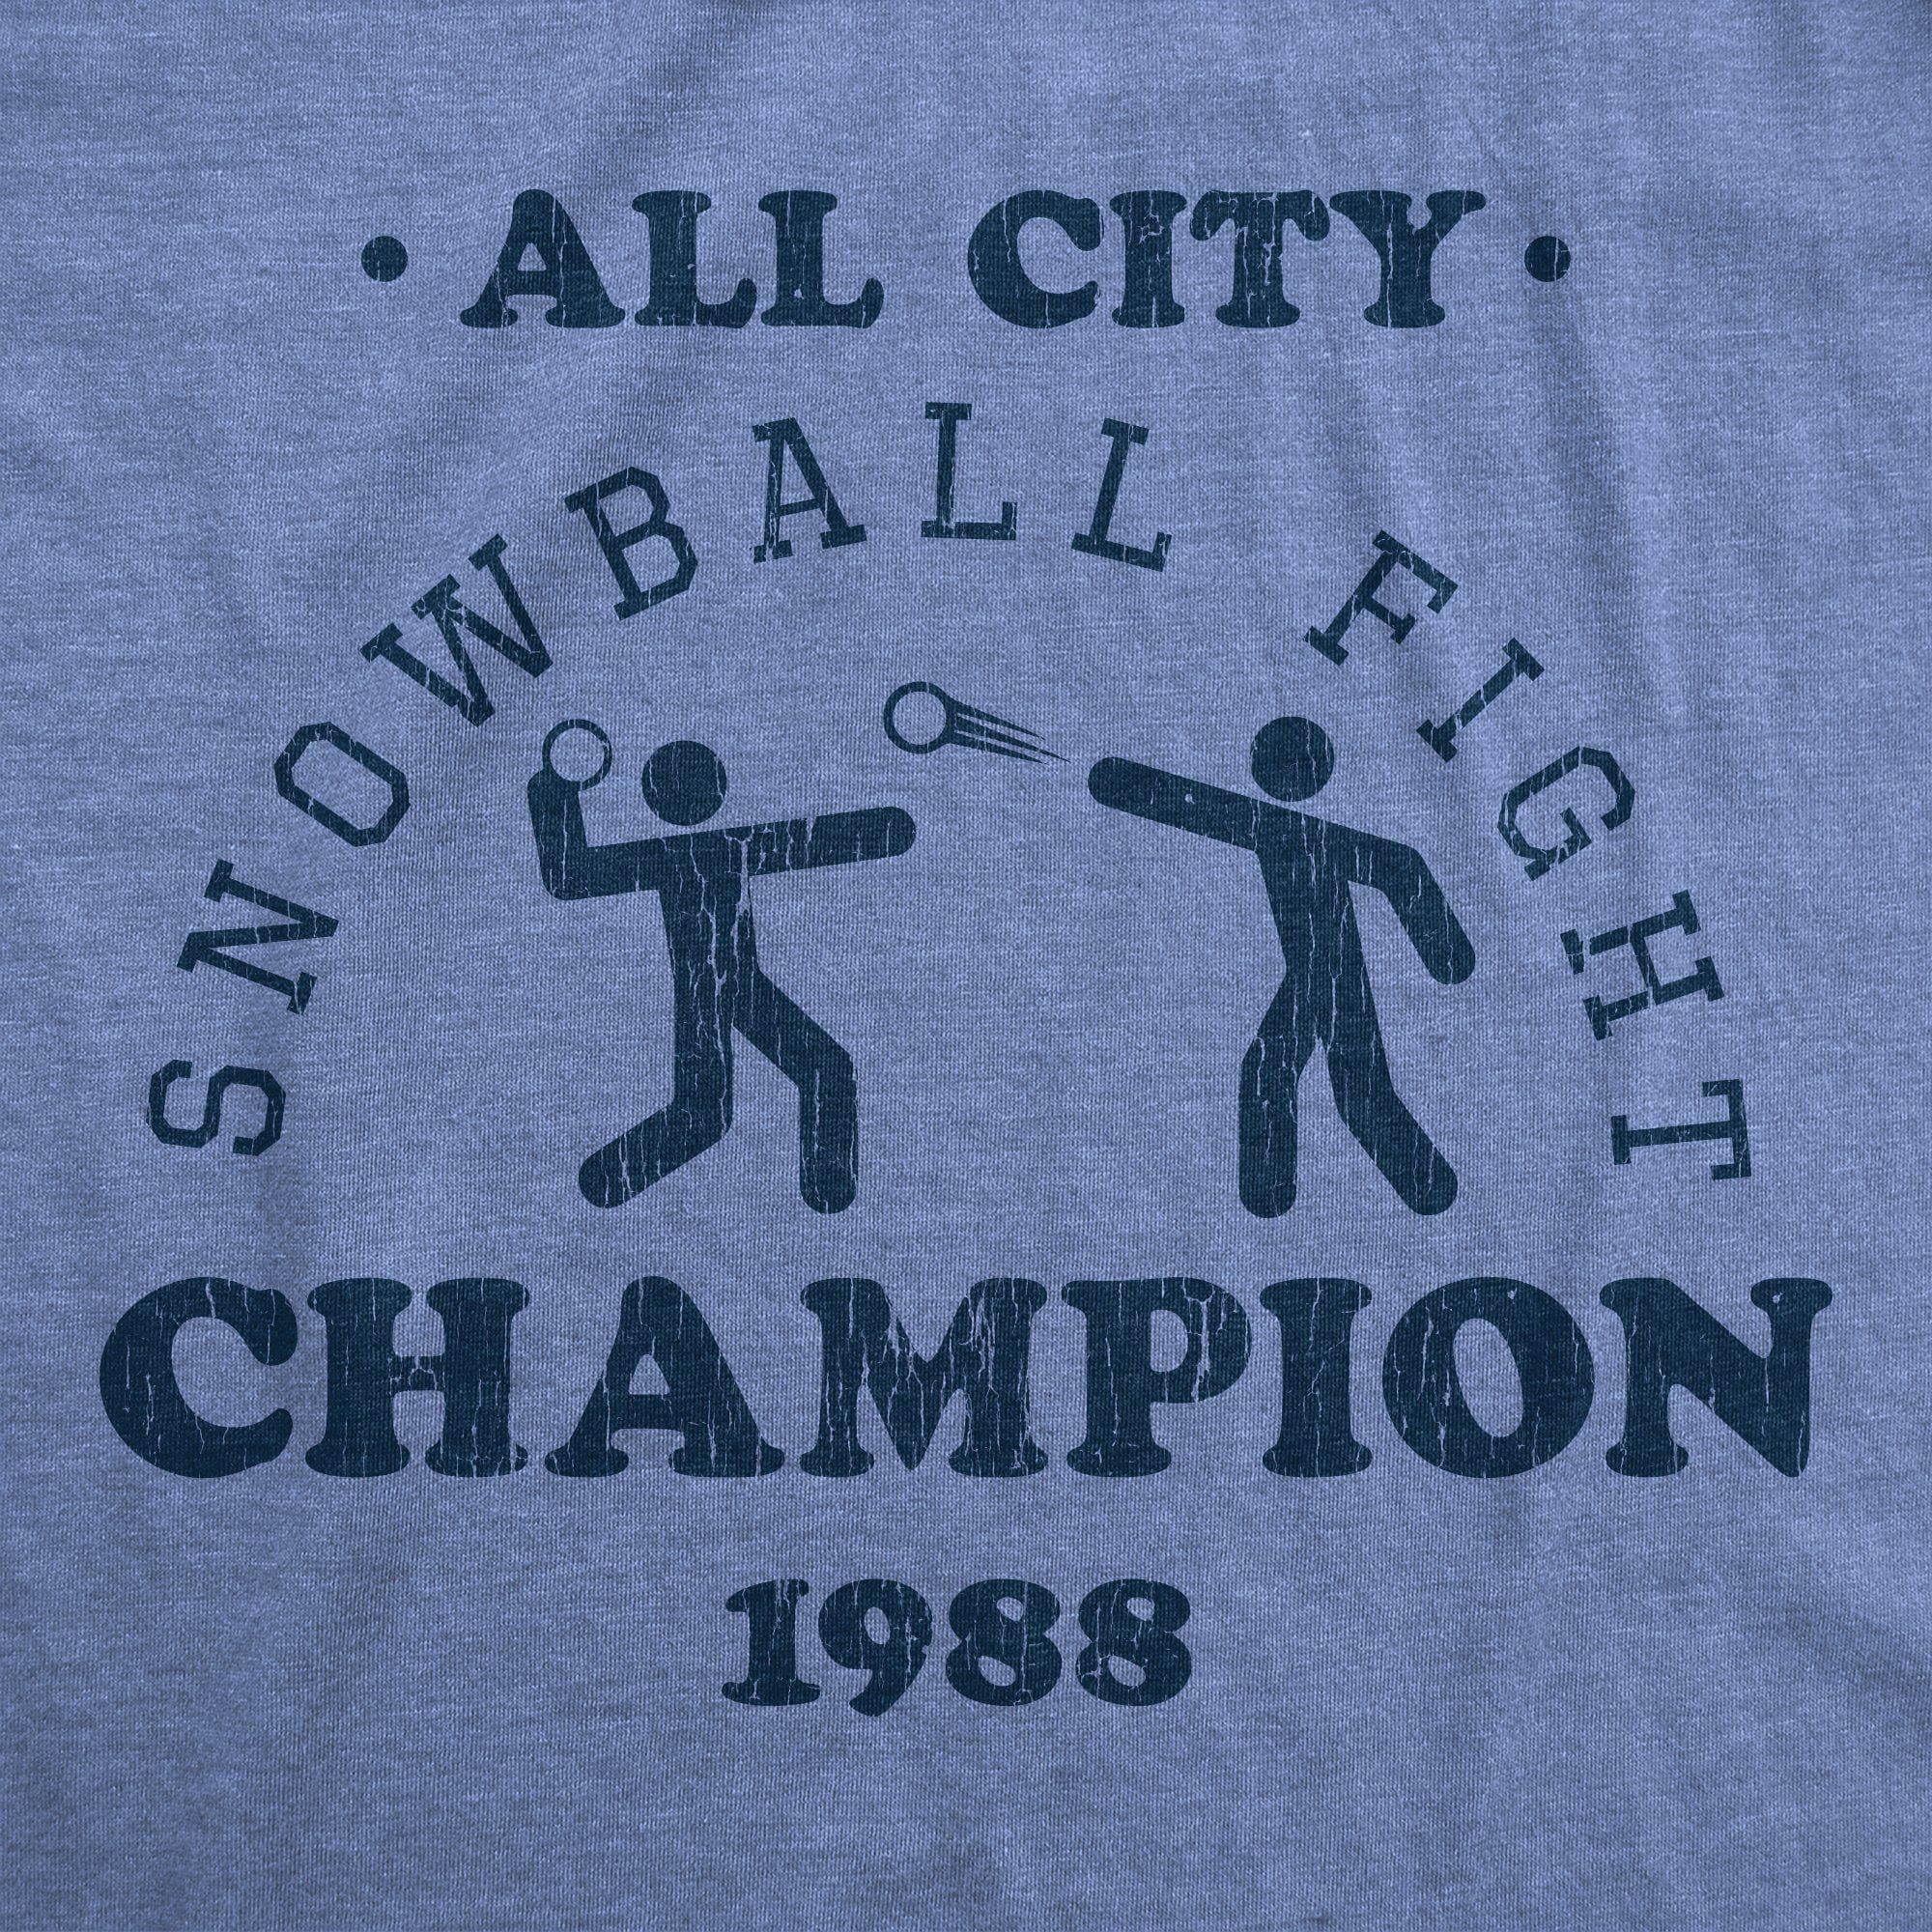 All City Snowball Fight Champion 1988 Men's Tshirt - Crazy Dog T-Shirts